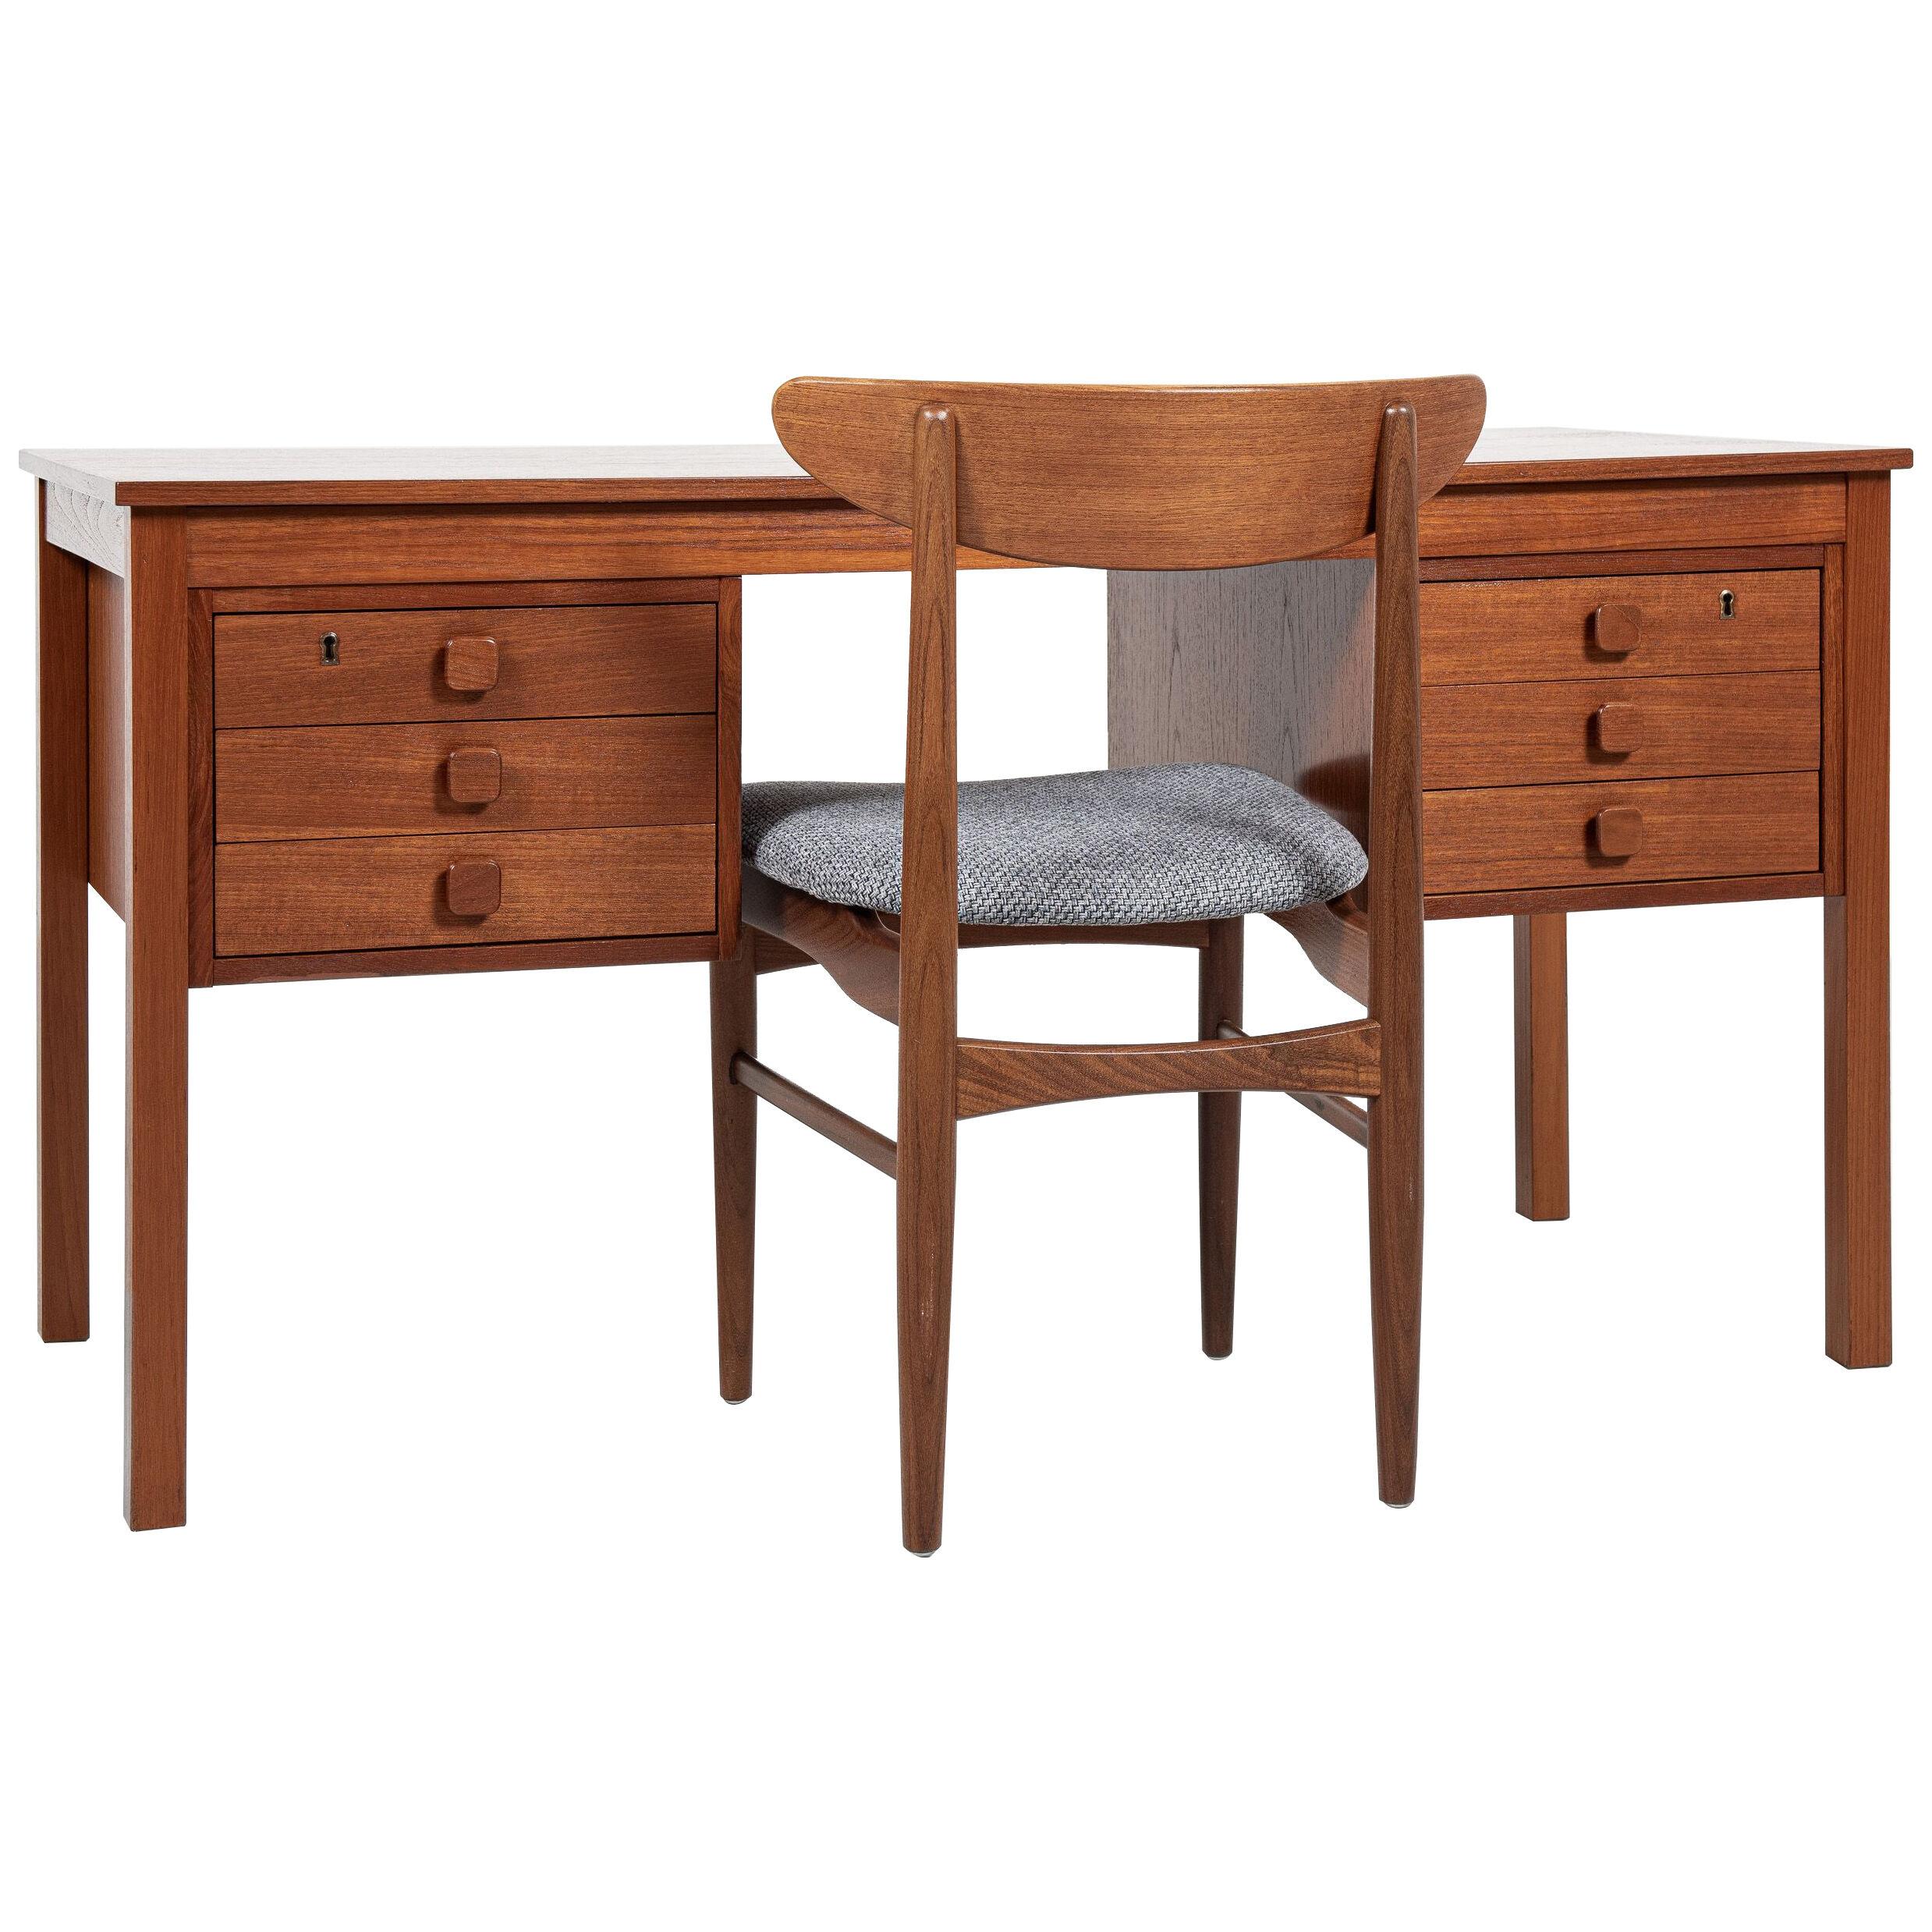 Midcentury compact Danish desk in teak with 2x3 drawers 1960s